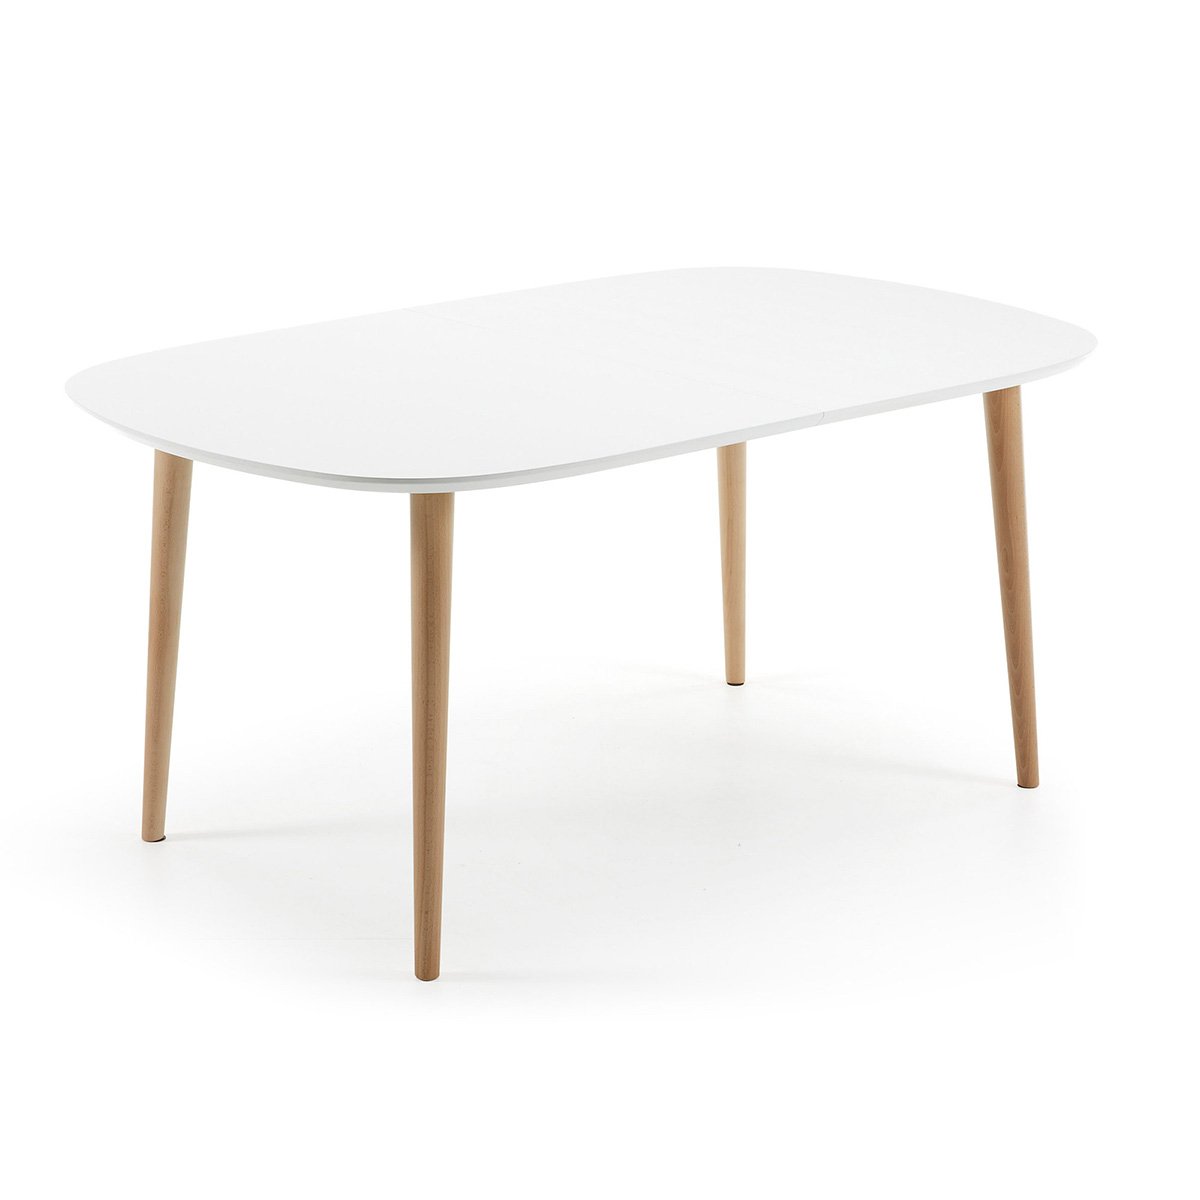 Oqui tavolo allungabile ovale 160/260 x 100 cm bianco